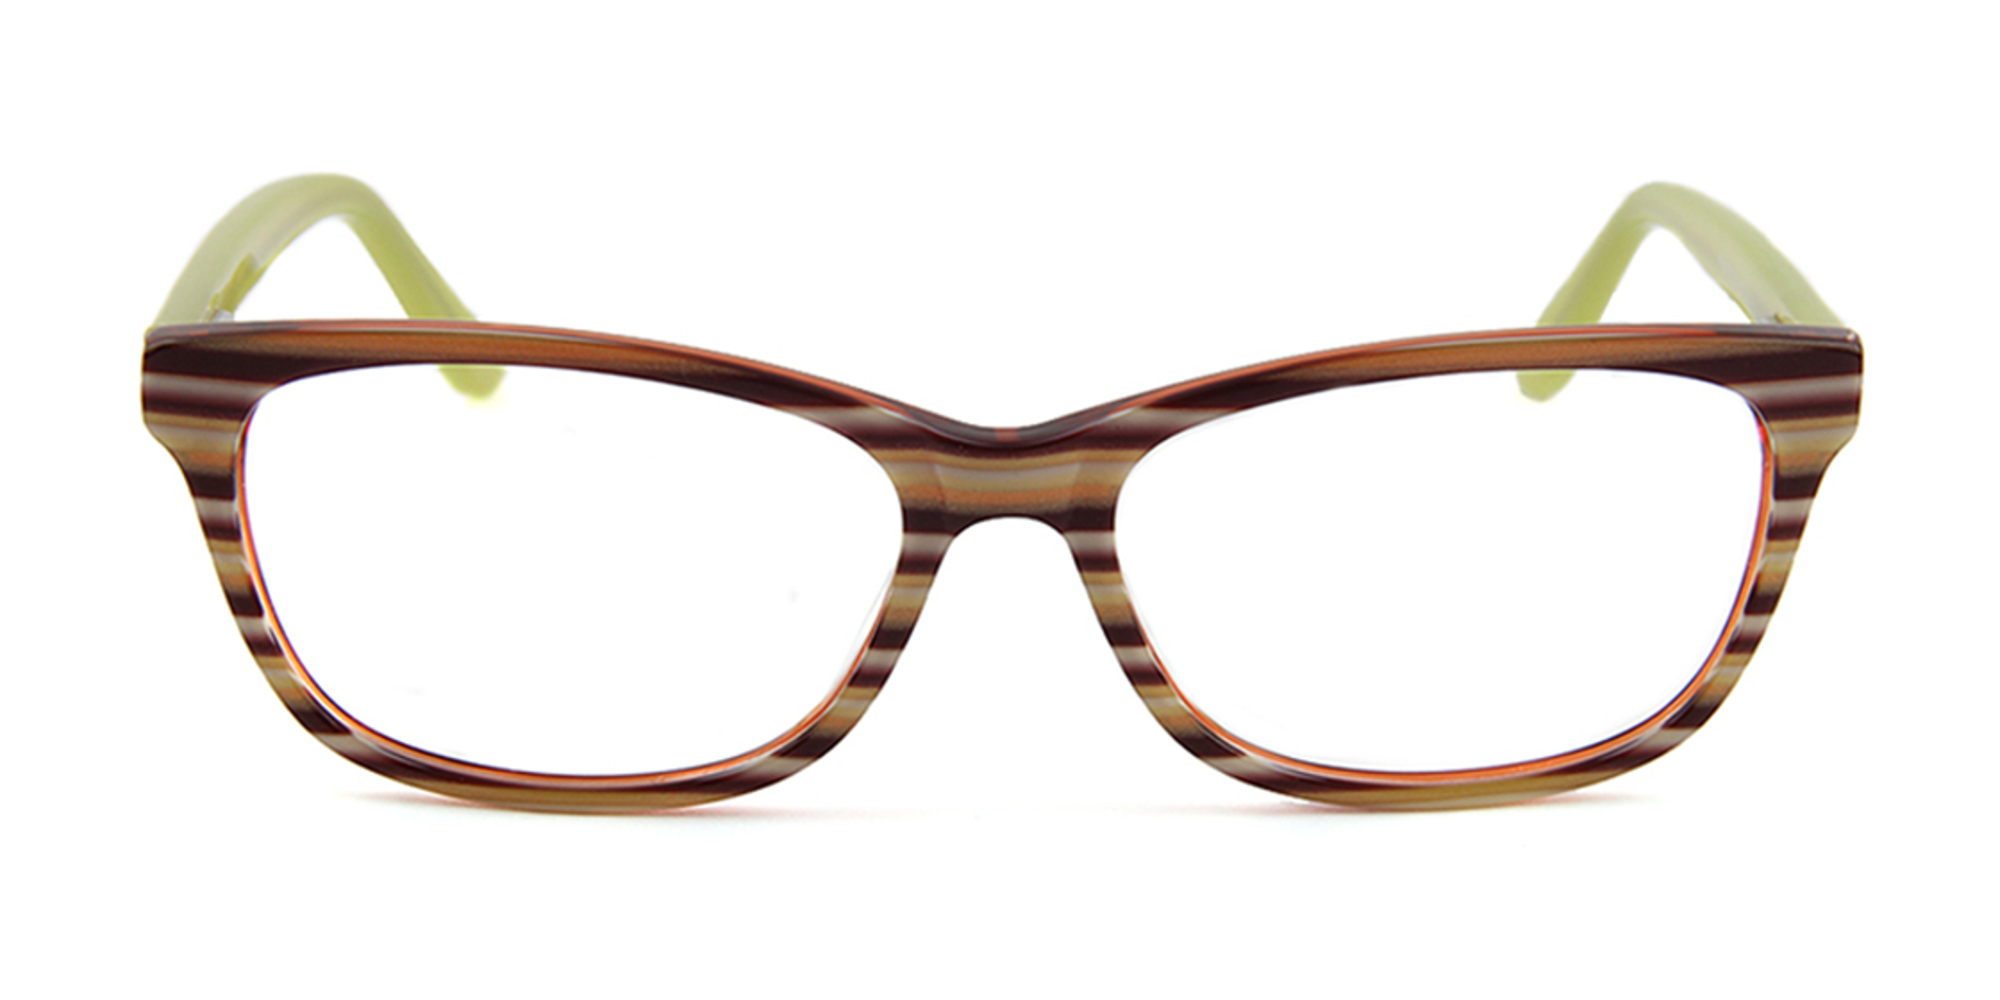 Falna: Italian Acetate Eyeglasses from $25